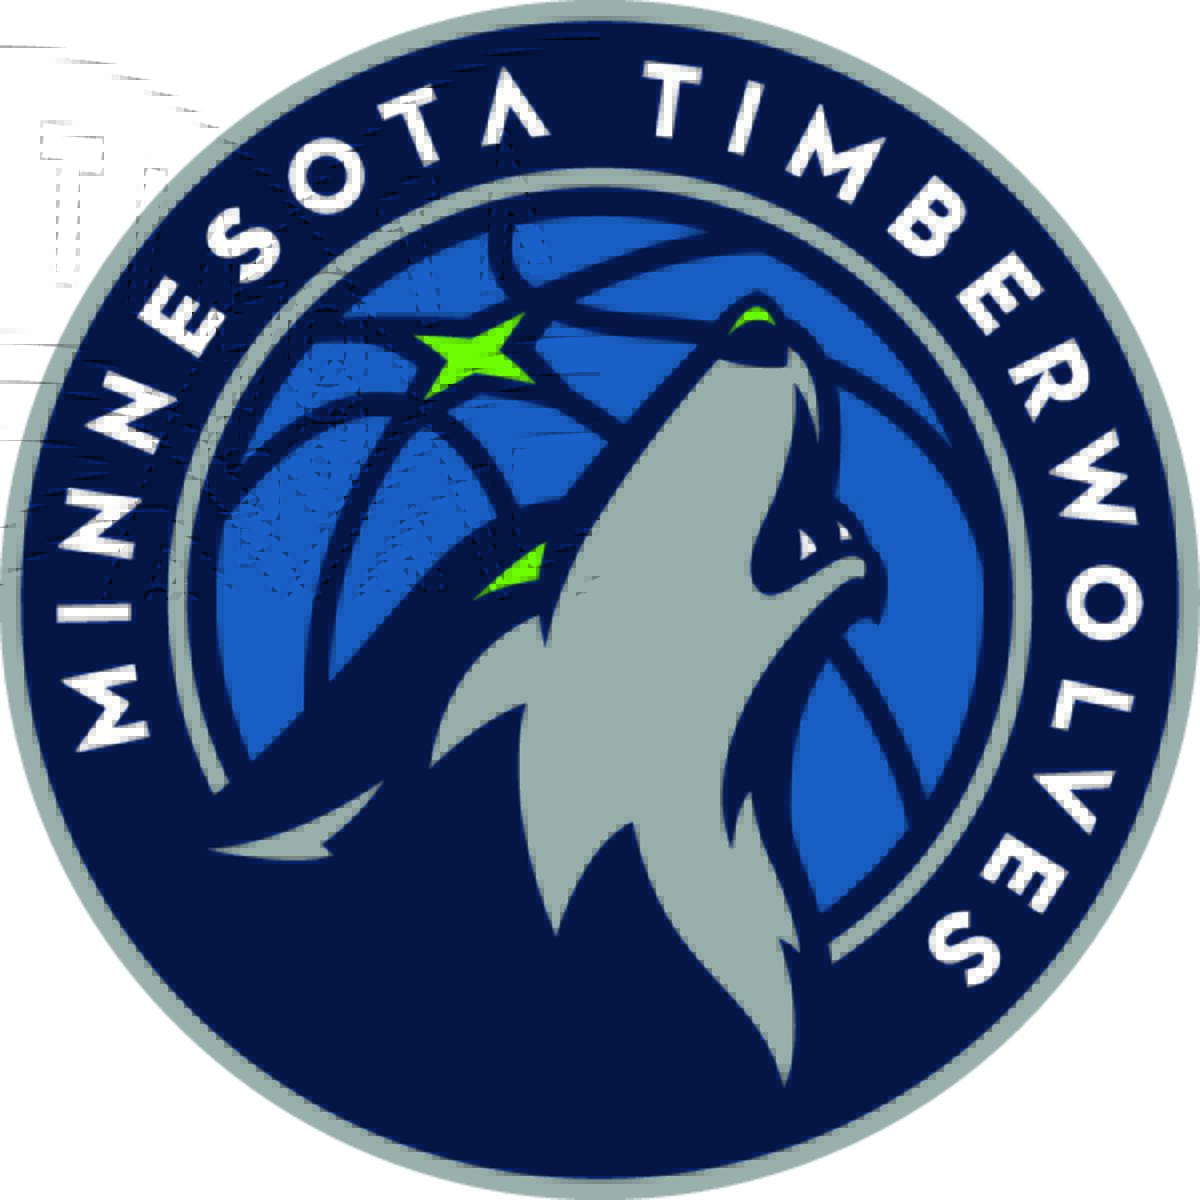 Ballons de basket NBA Team Tribute Minnesota Timberwolves